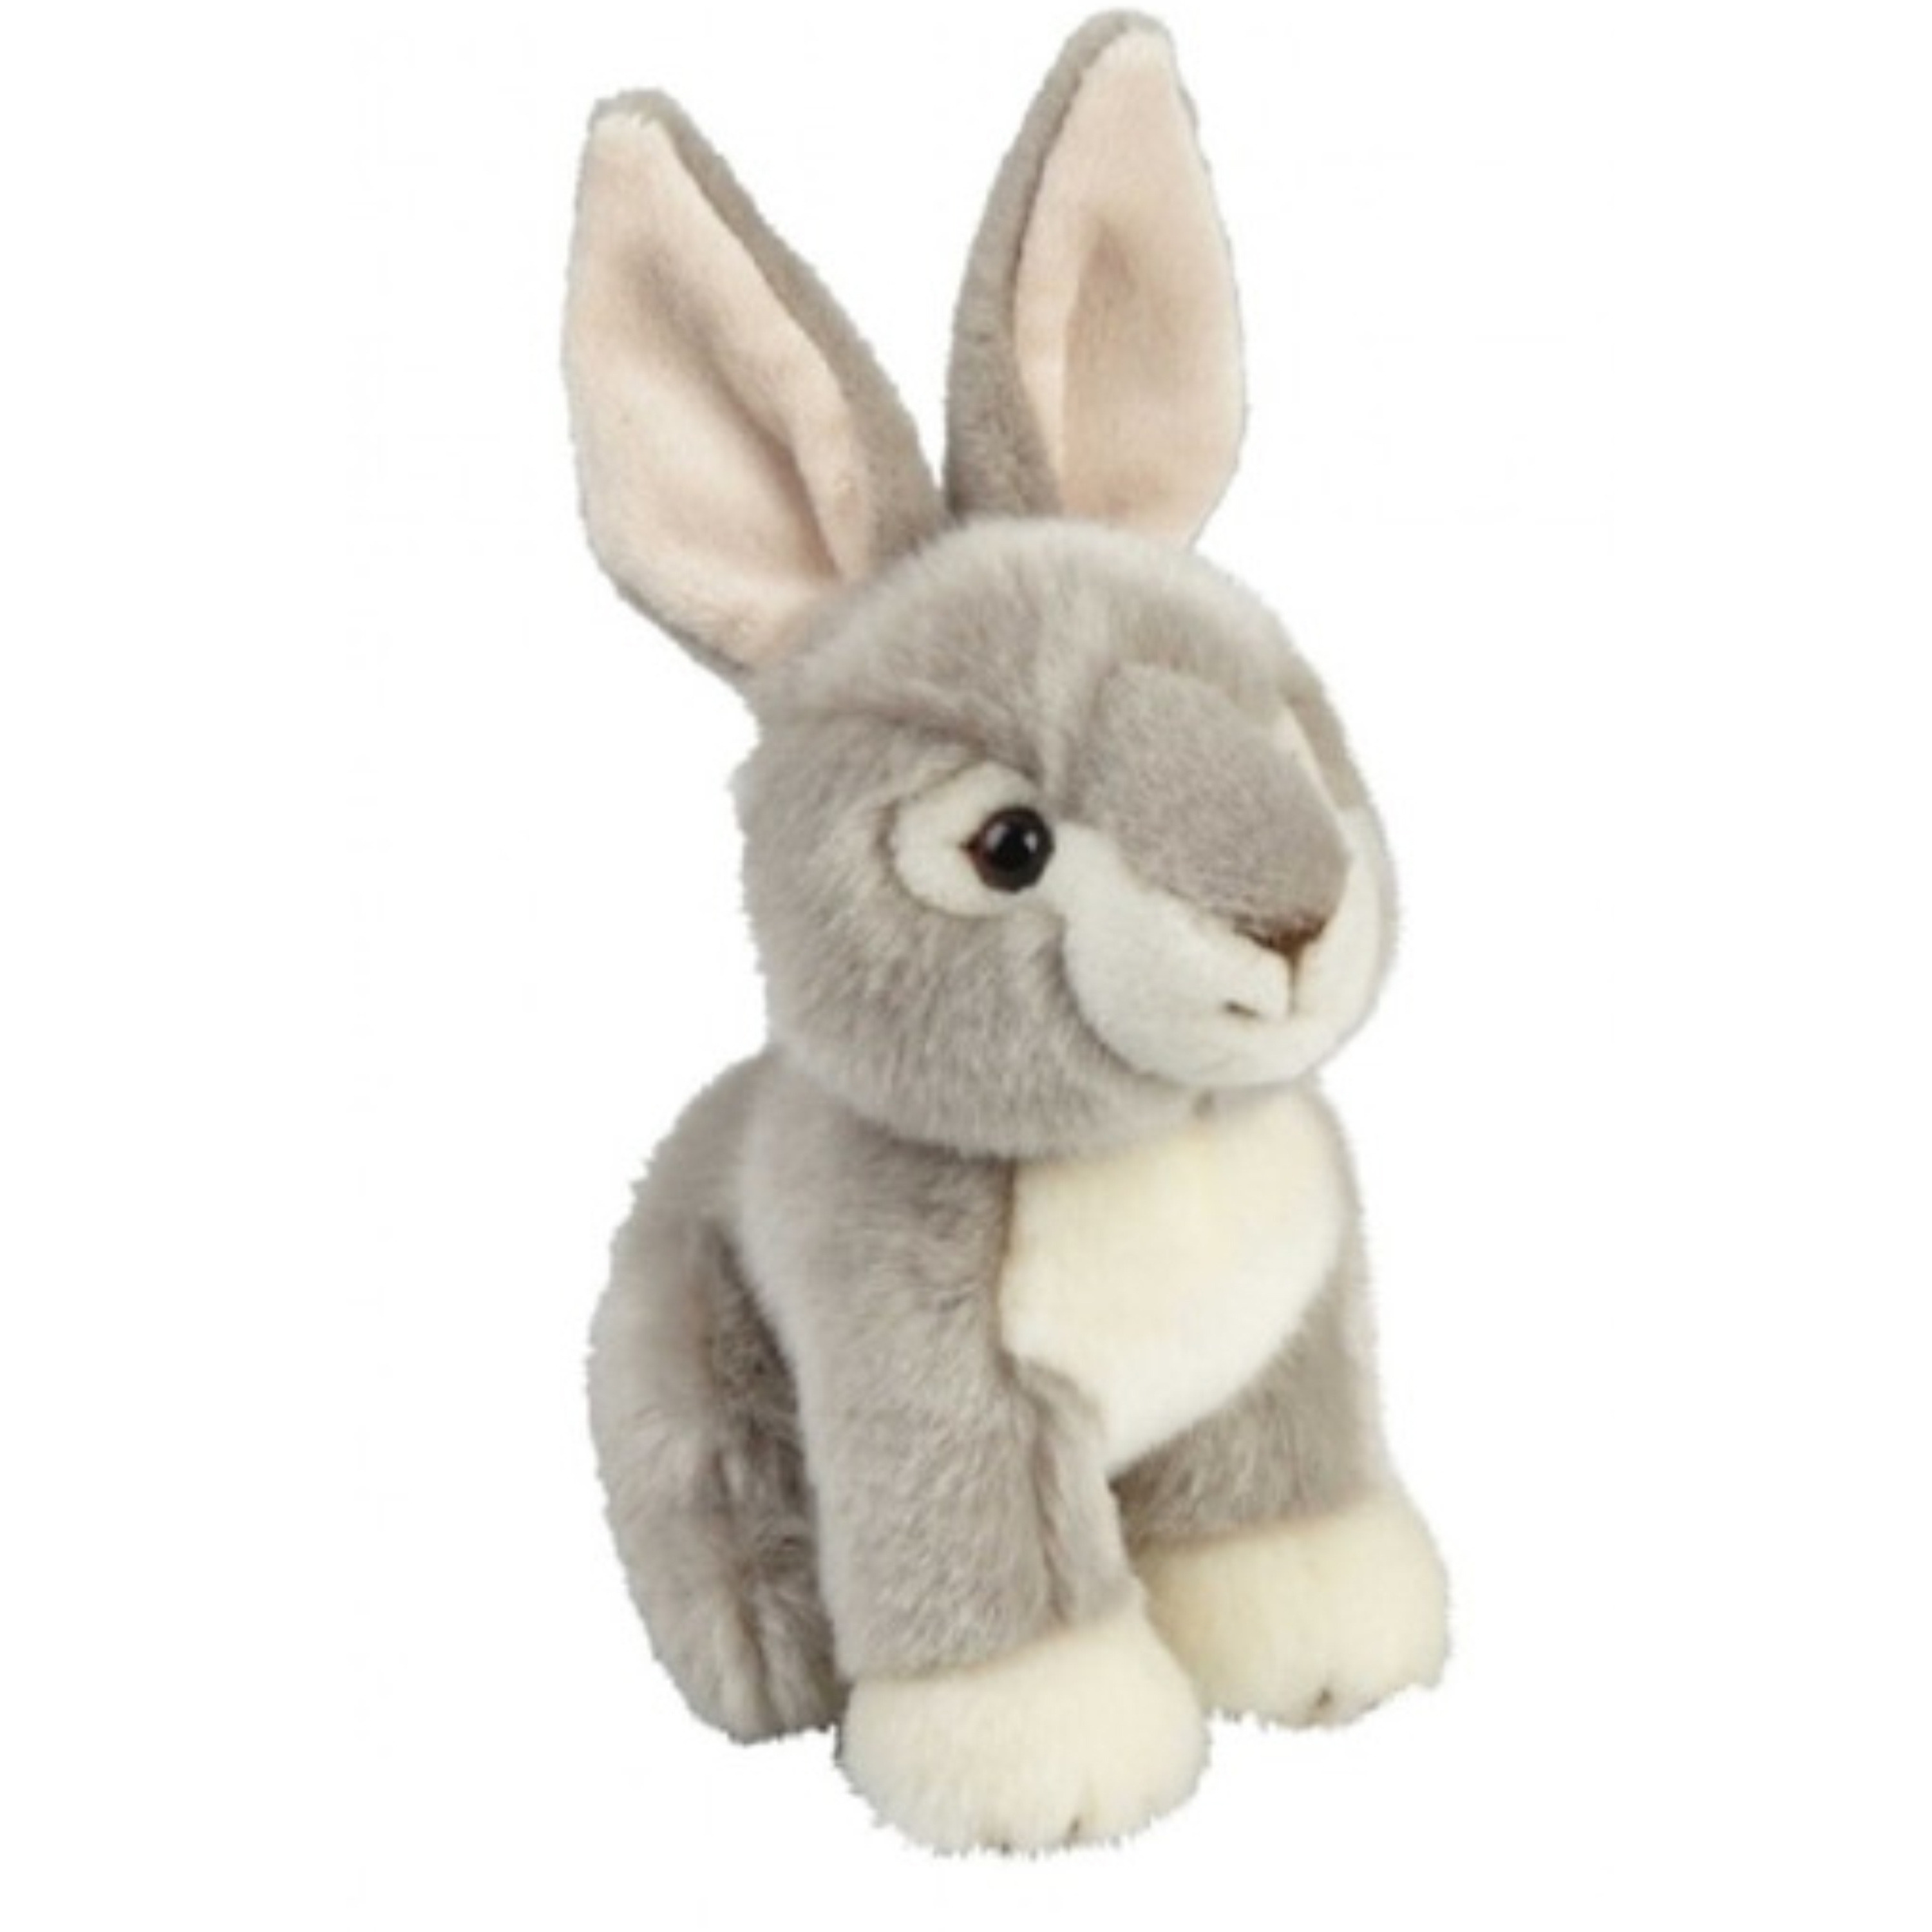 Ravensden Pluche grijs konijn/haas knuffel zittend 18 cm speelgoed -